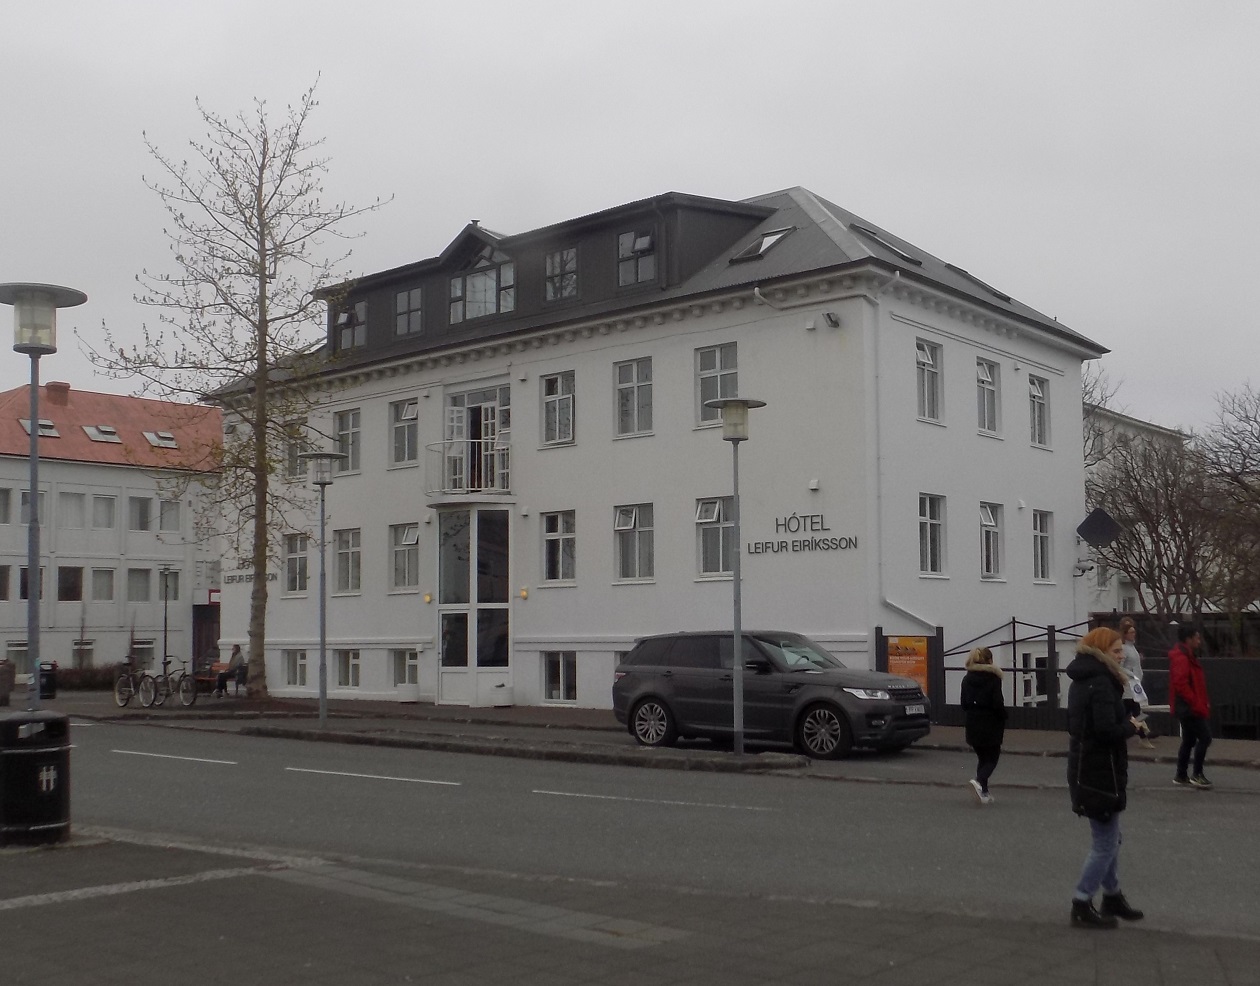 The Hotel Leifur Eriksson, Reykjavik